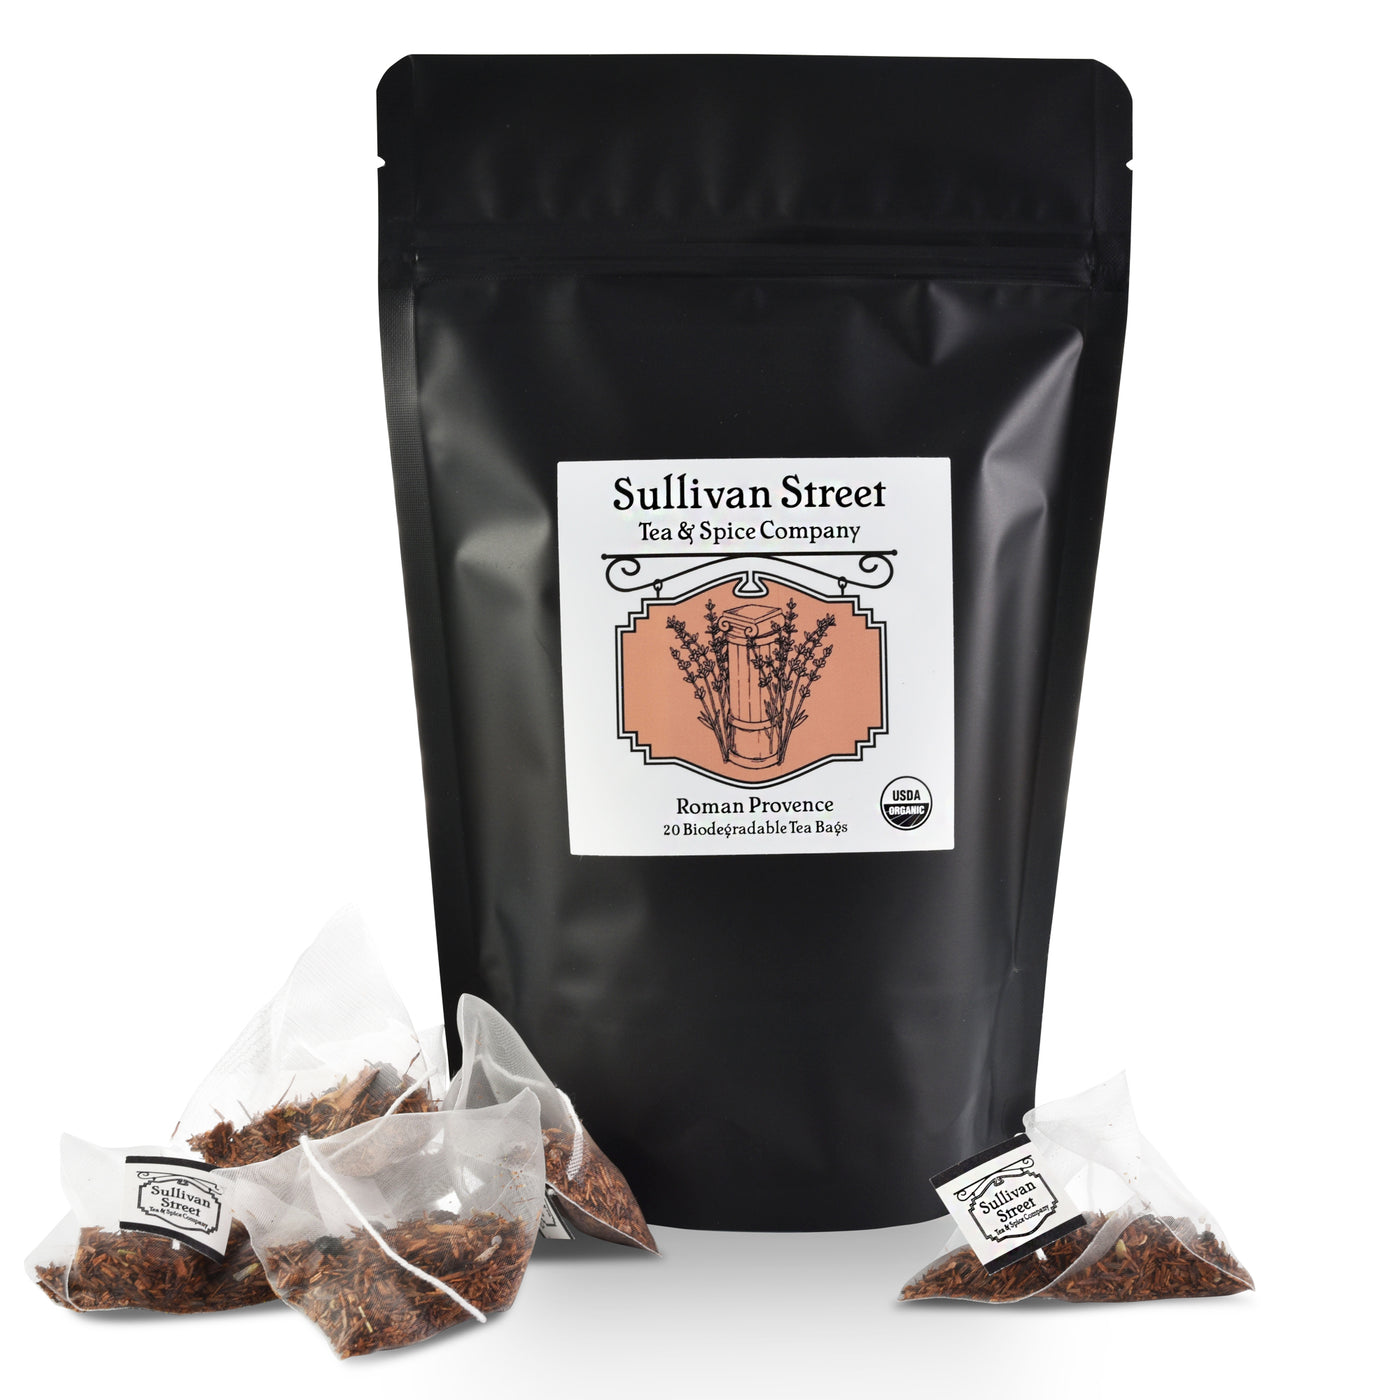 Roman Provence Tea Bags - Sullivan Street Tea & Spice Company